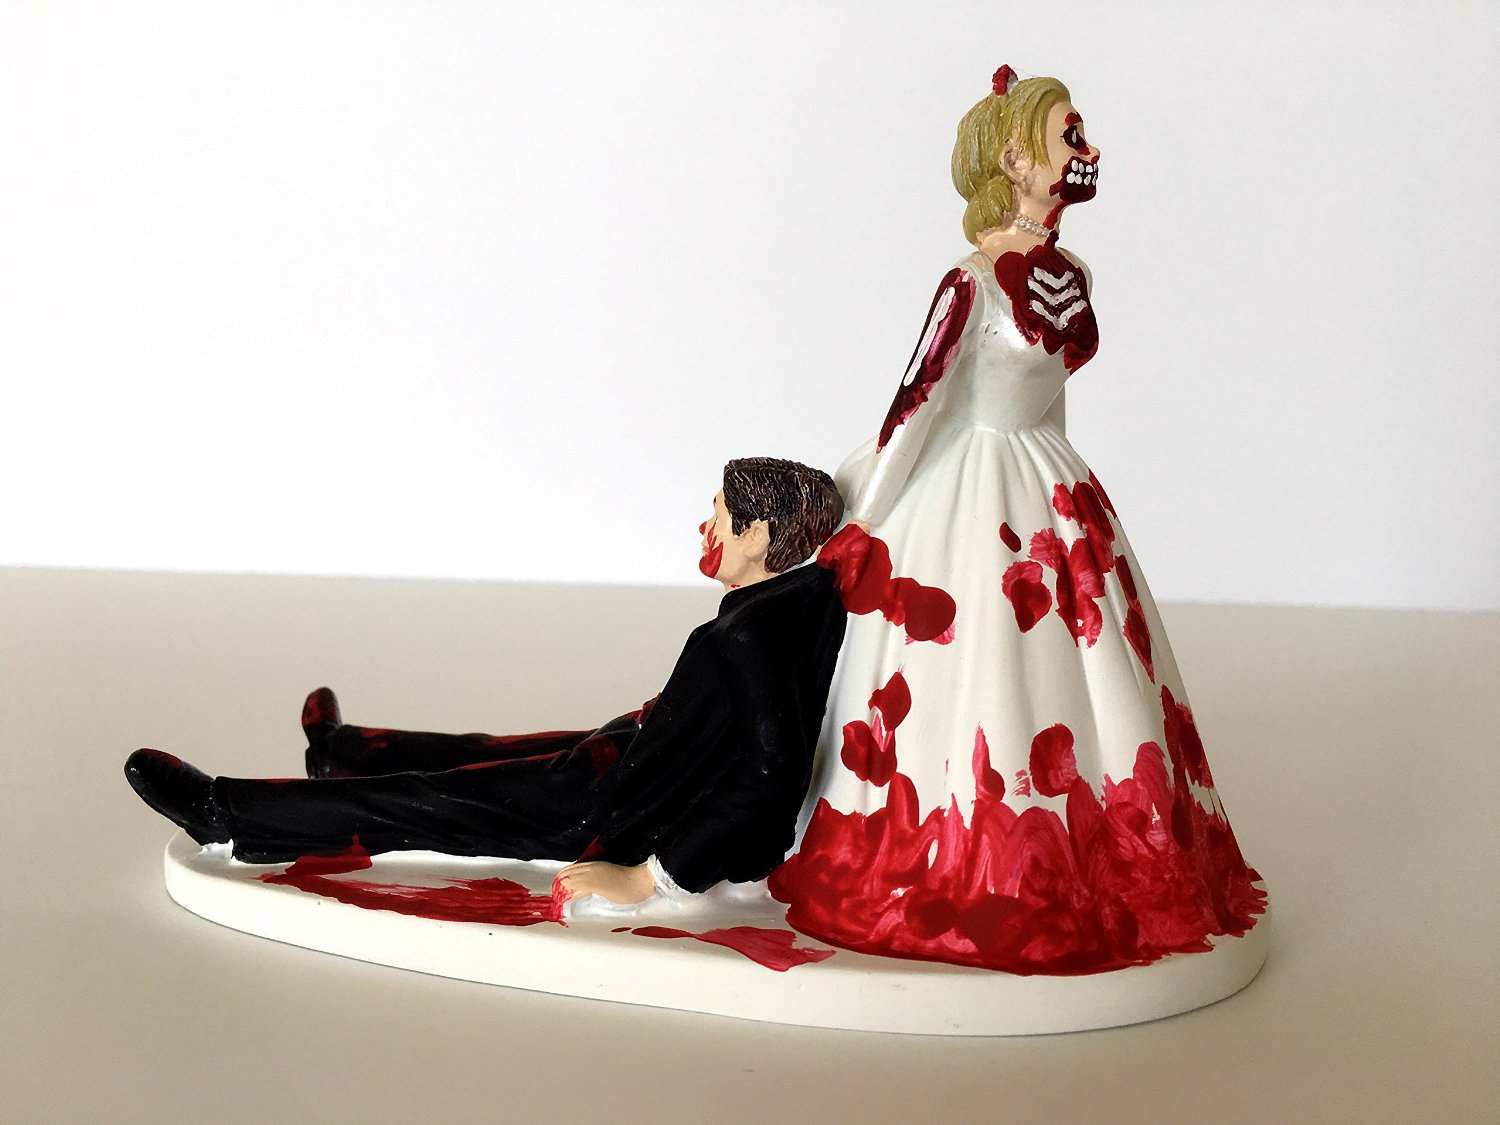 Wedding Cake, Funny wedding Cake Topper, Bride and Groom Figurine, Fun – C  T B